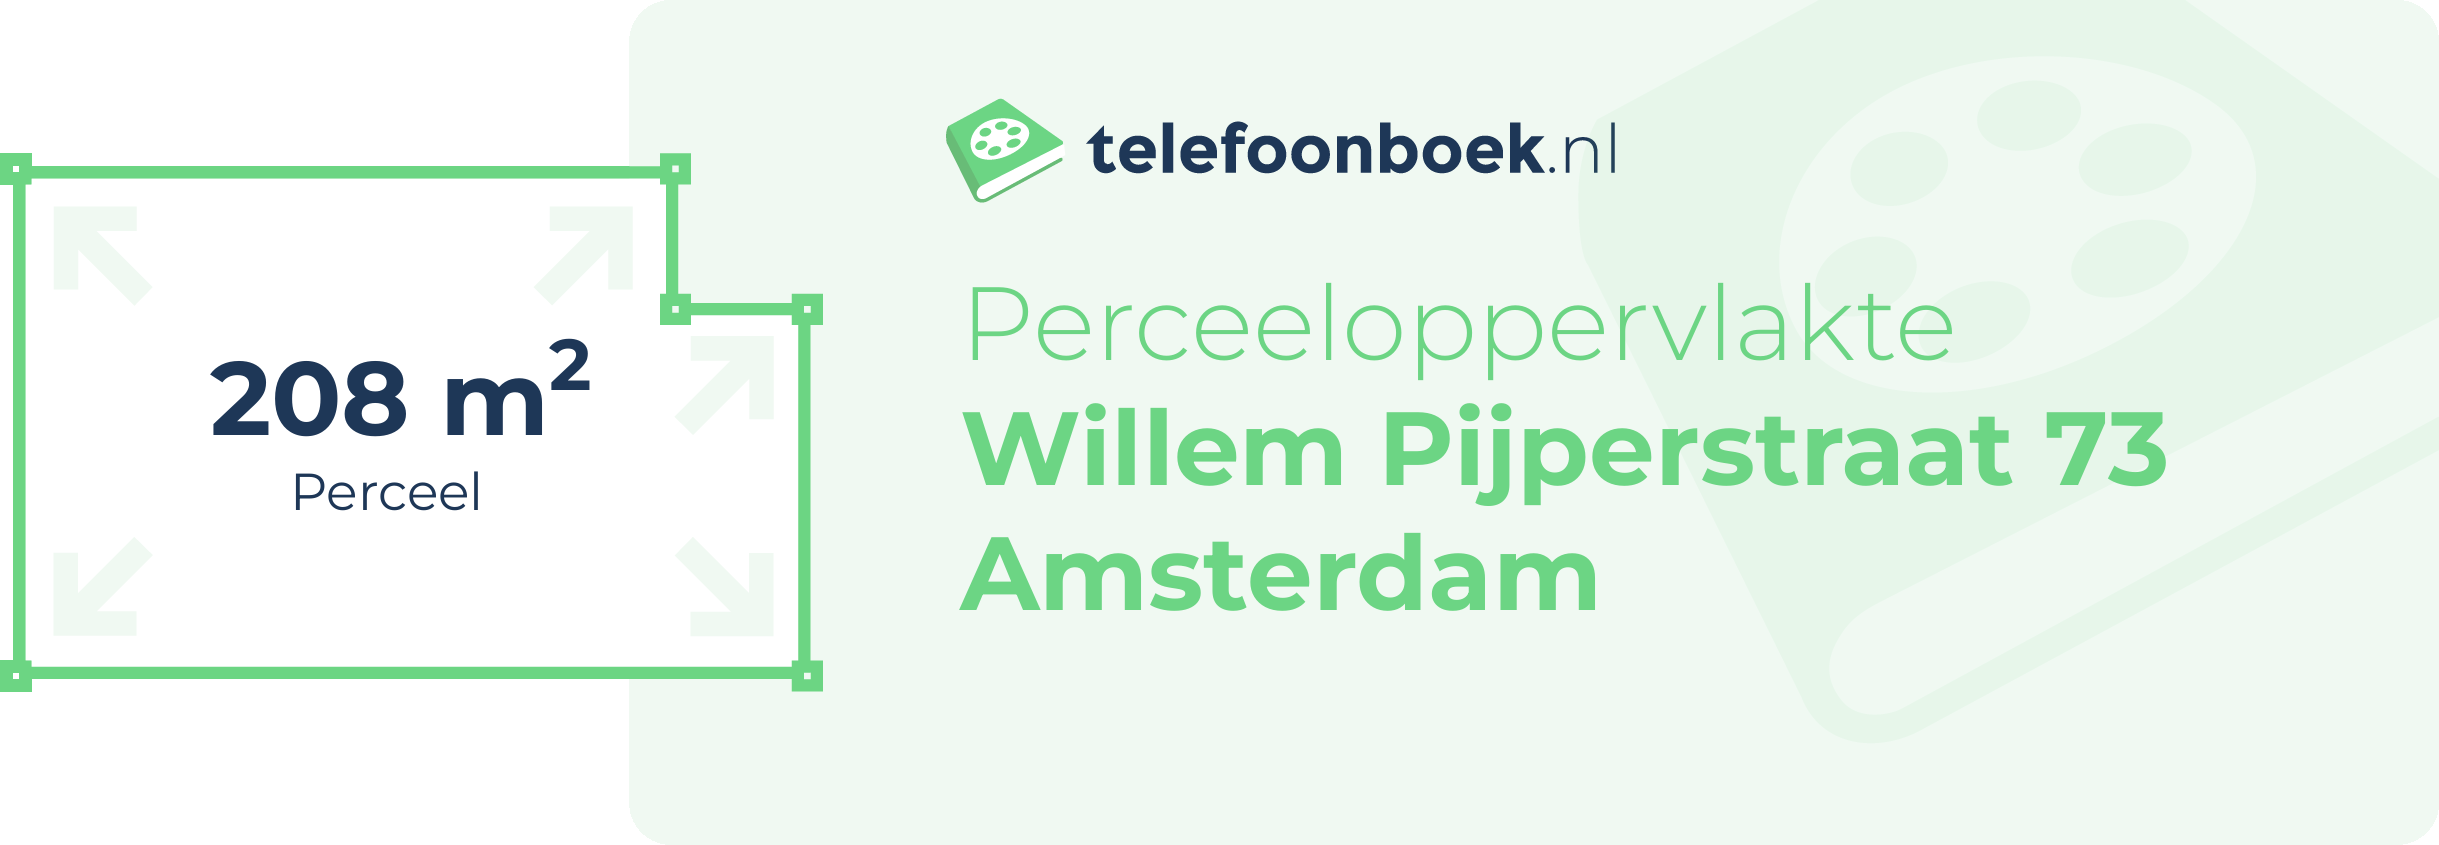 Perceeloppervlakte Willem Pijperstraat 73 Amsterdam